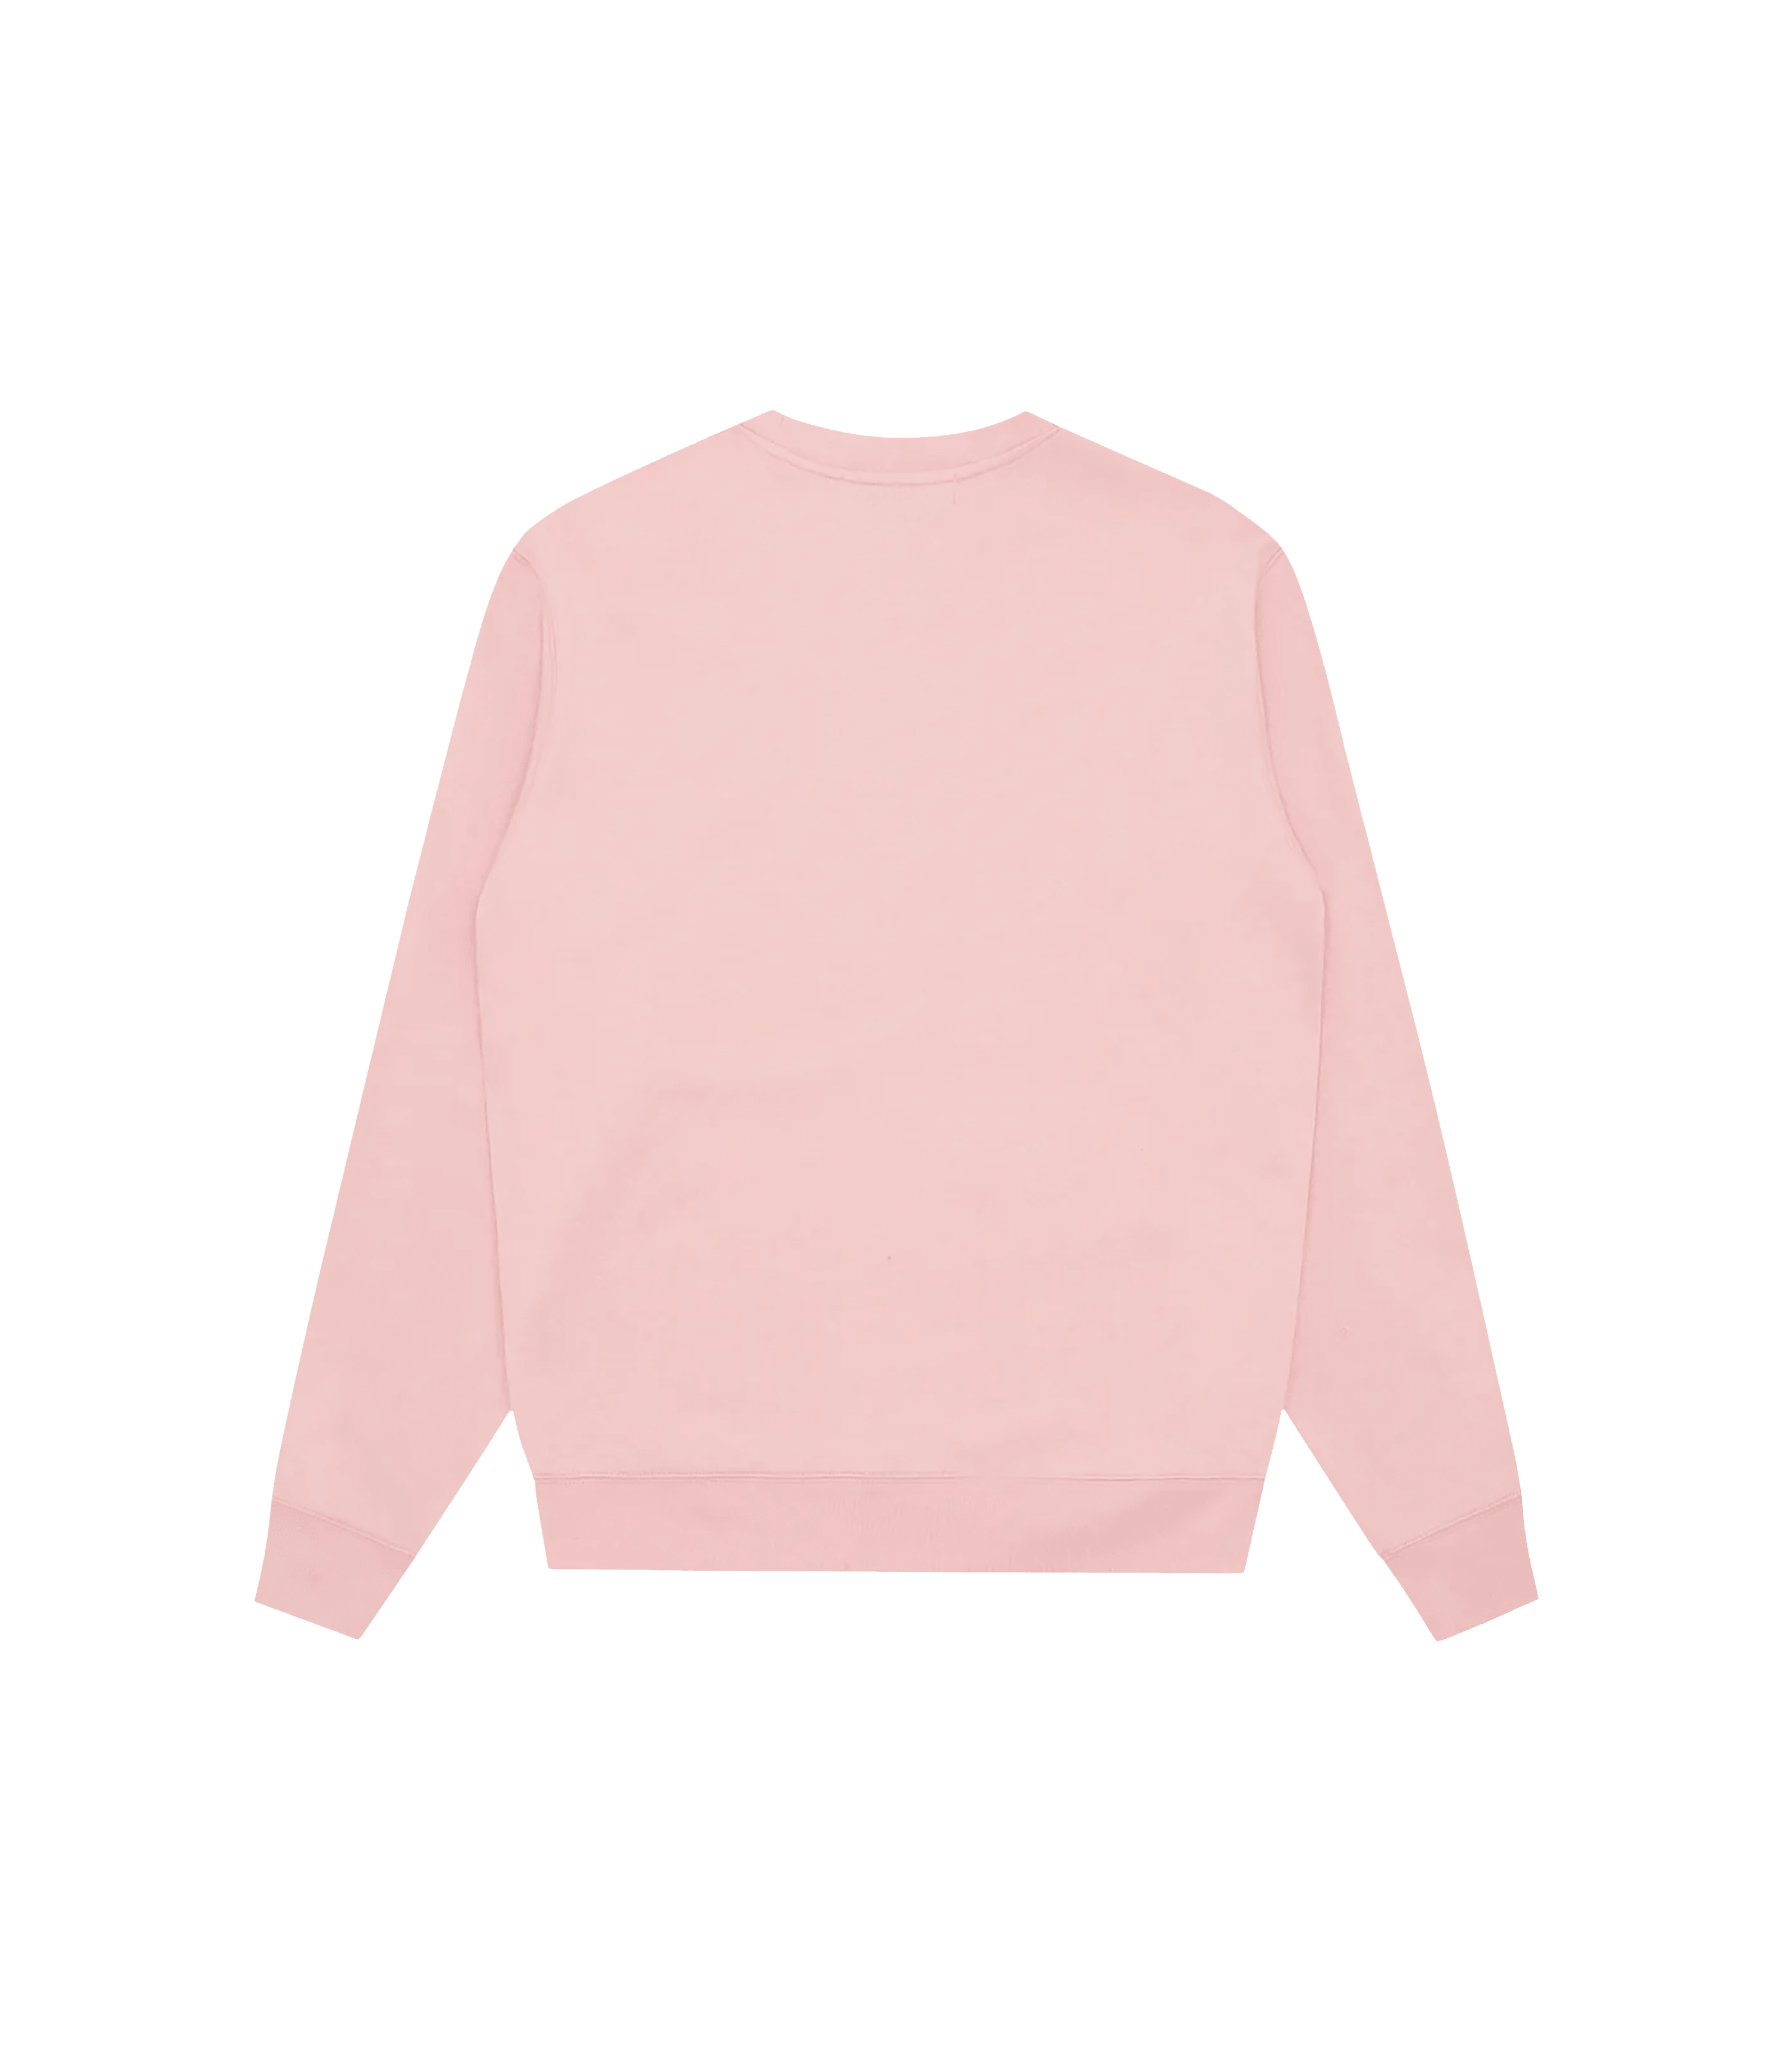 Zorro Stuff Sweatshirts Inspiration Sweatshirt Pink